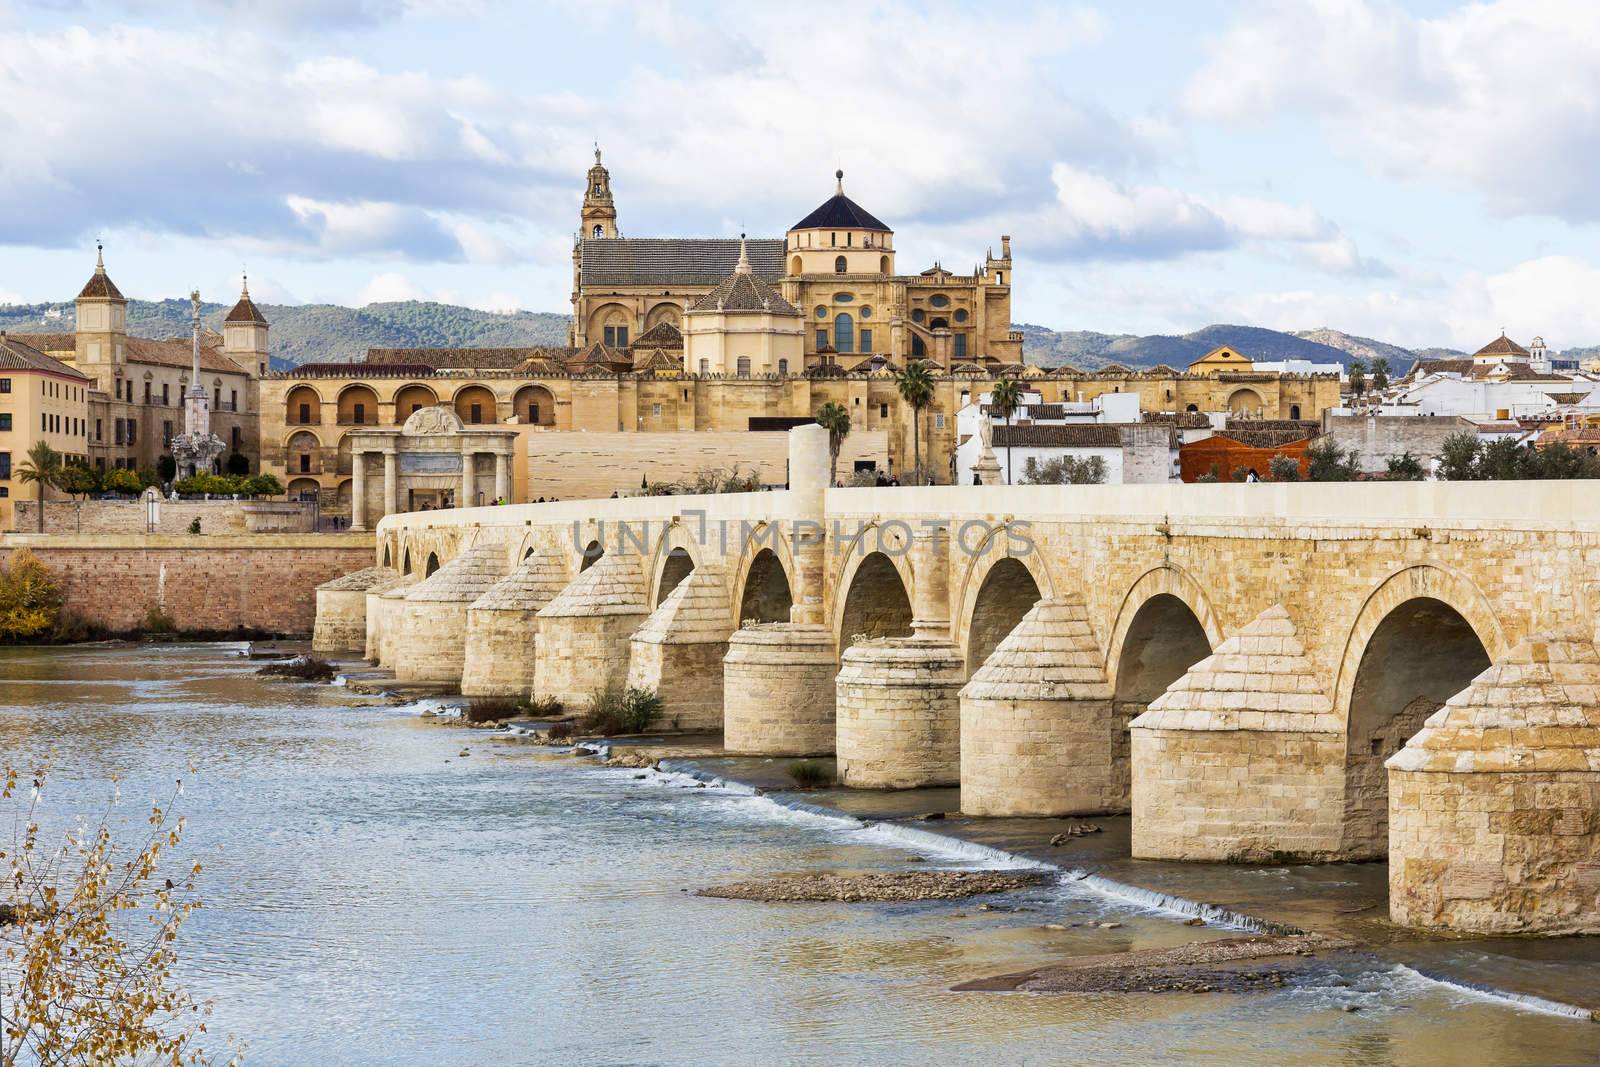 Roman Bridge and Mosque Cathedral of Cordoba in Spain by Brigida_Soriano